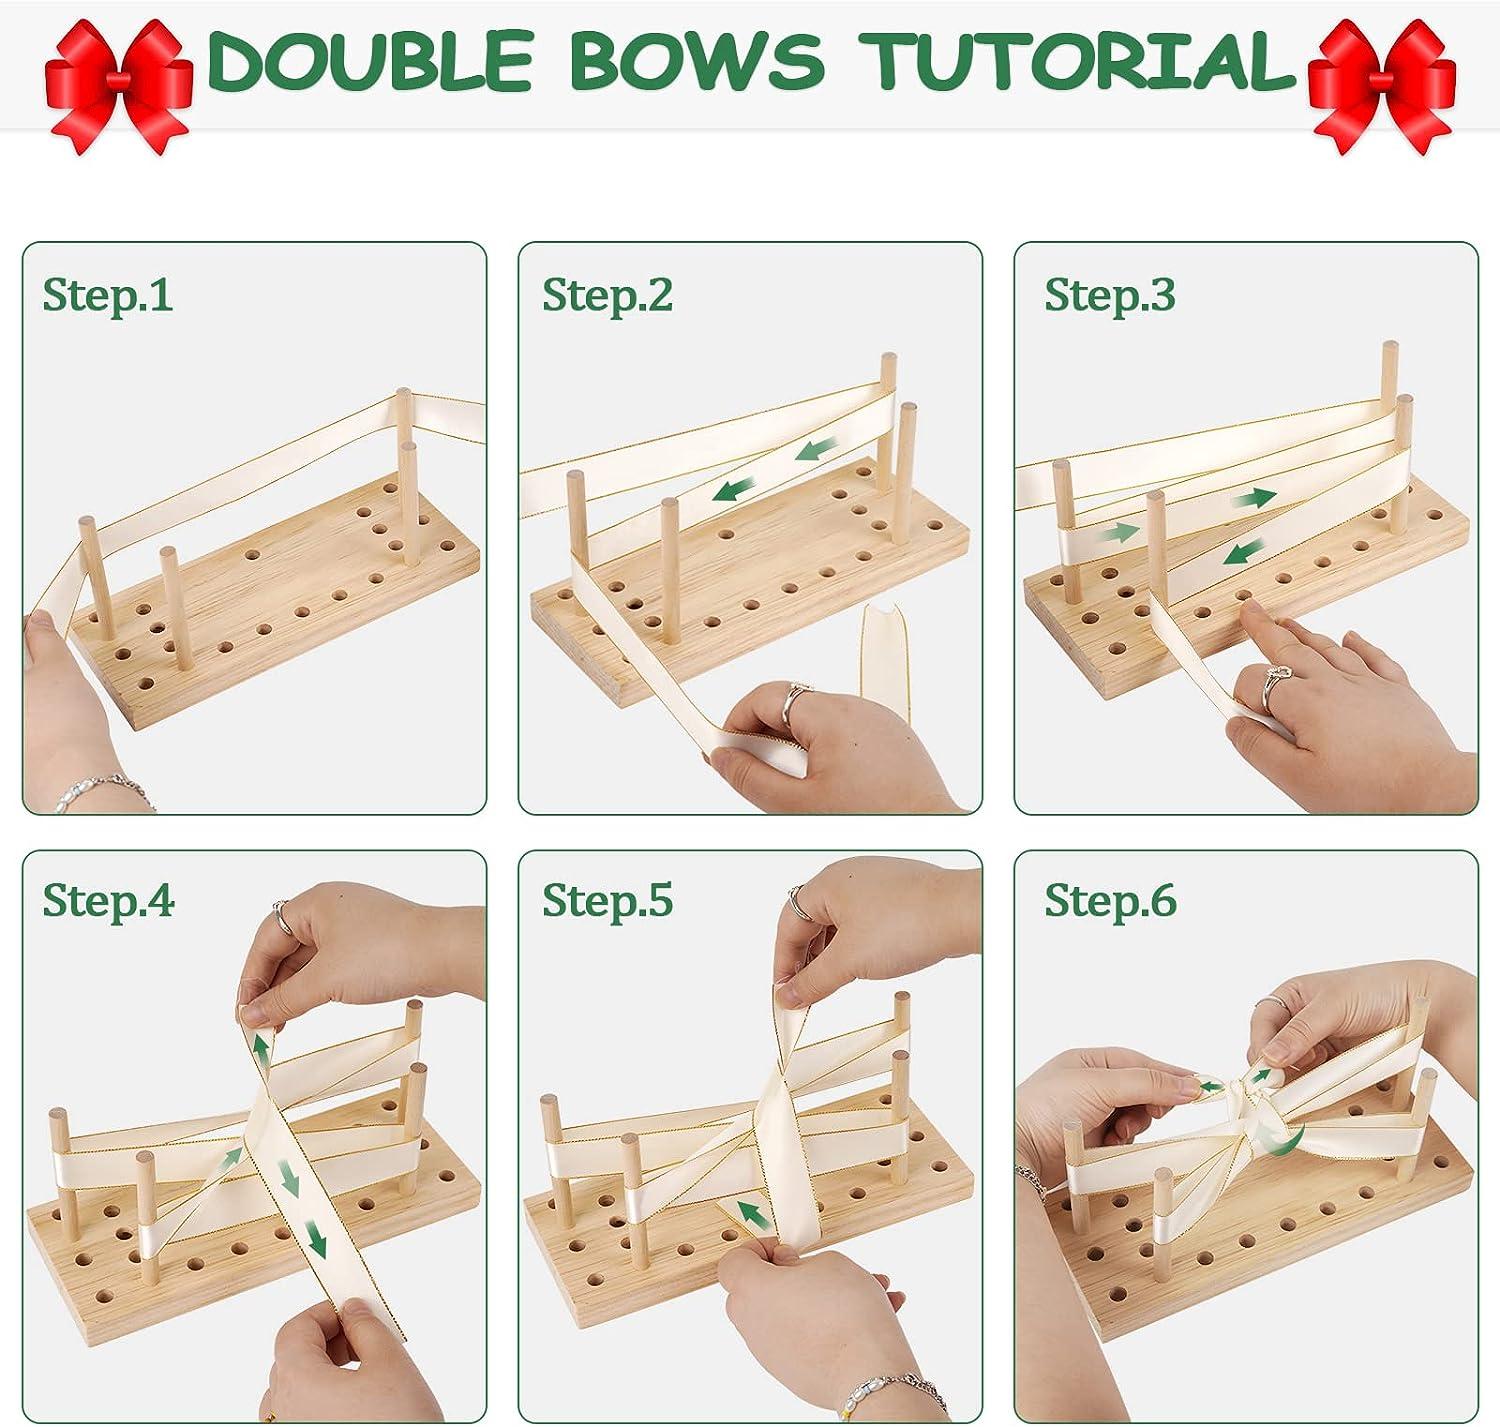 Bow Maker for Ribbon ,2-in-1 Multipurpose Rectangle Wooden Bow